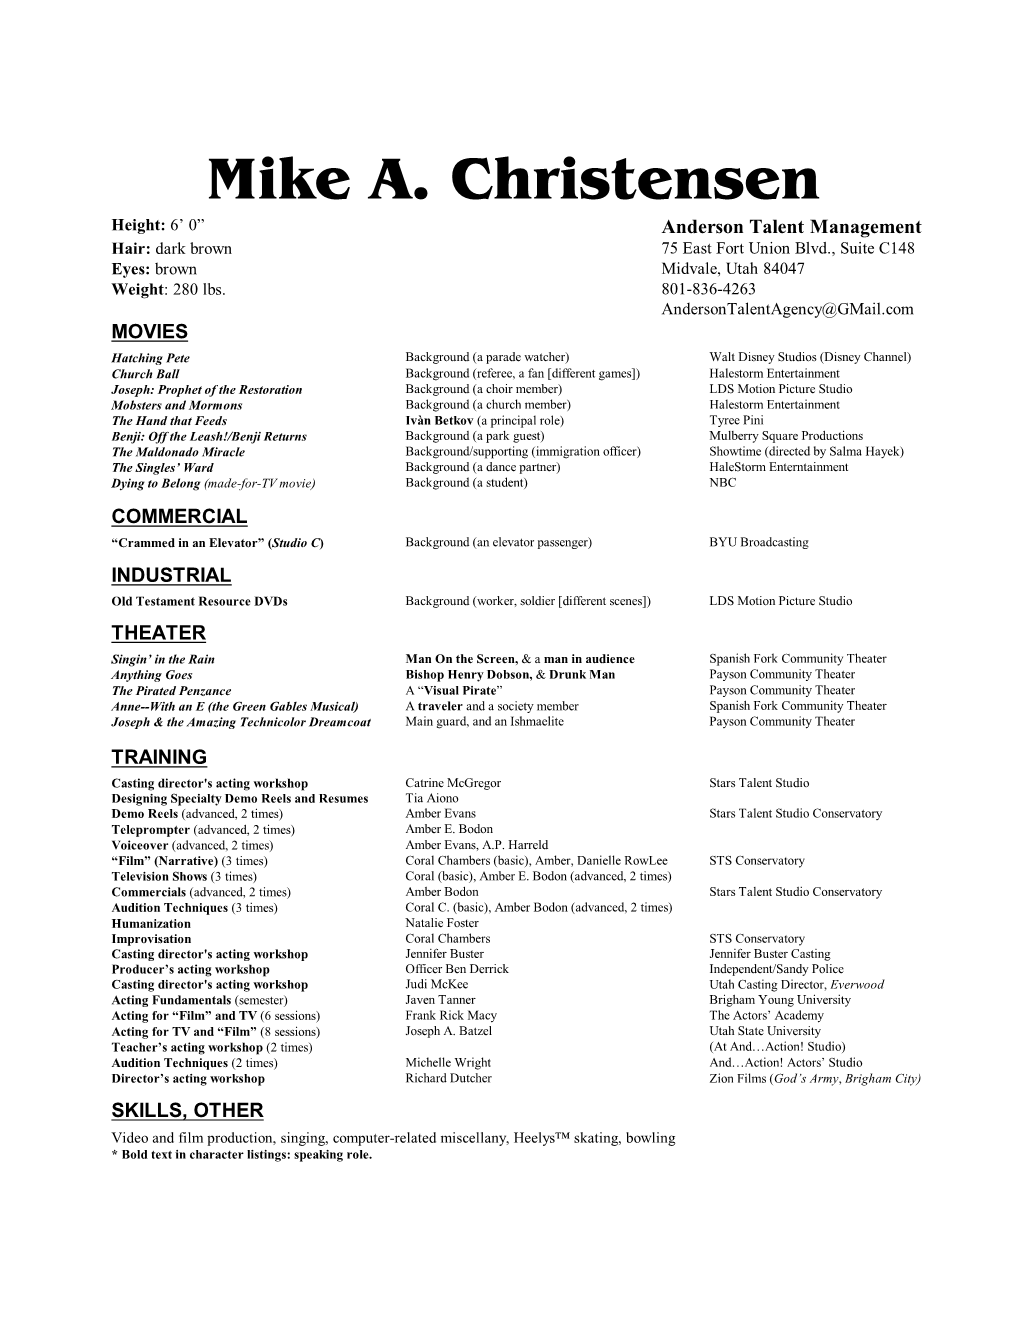 Mike a Christensen's Acting Résumé, 05-13-17--71917